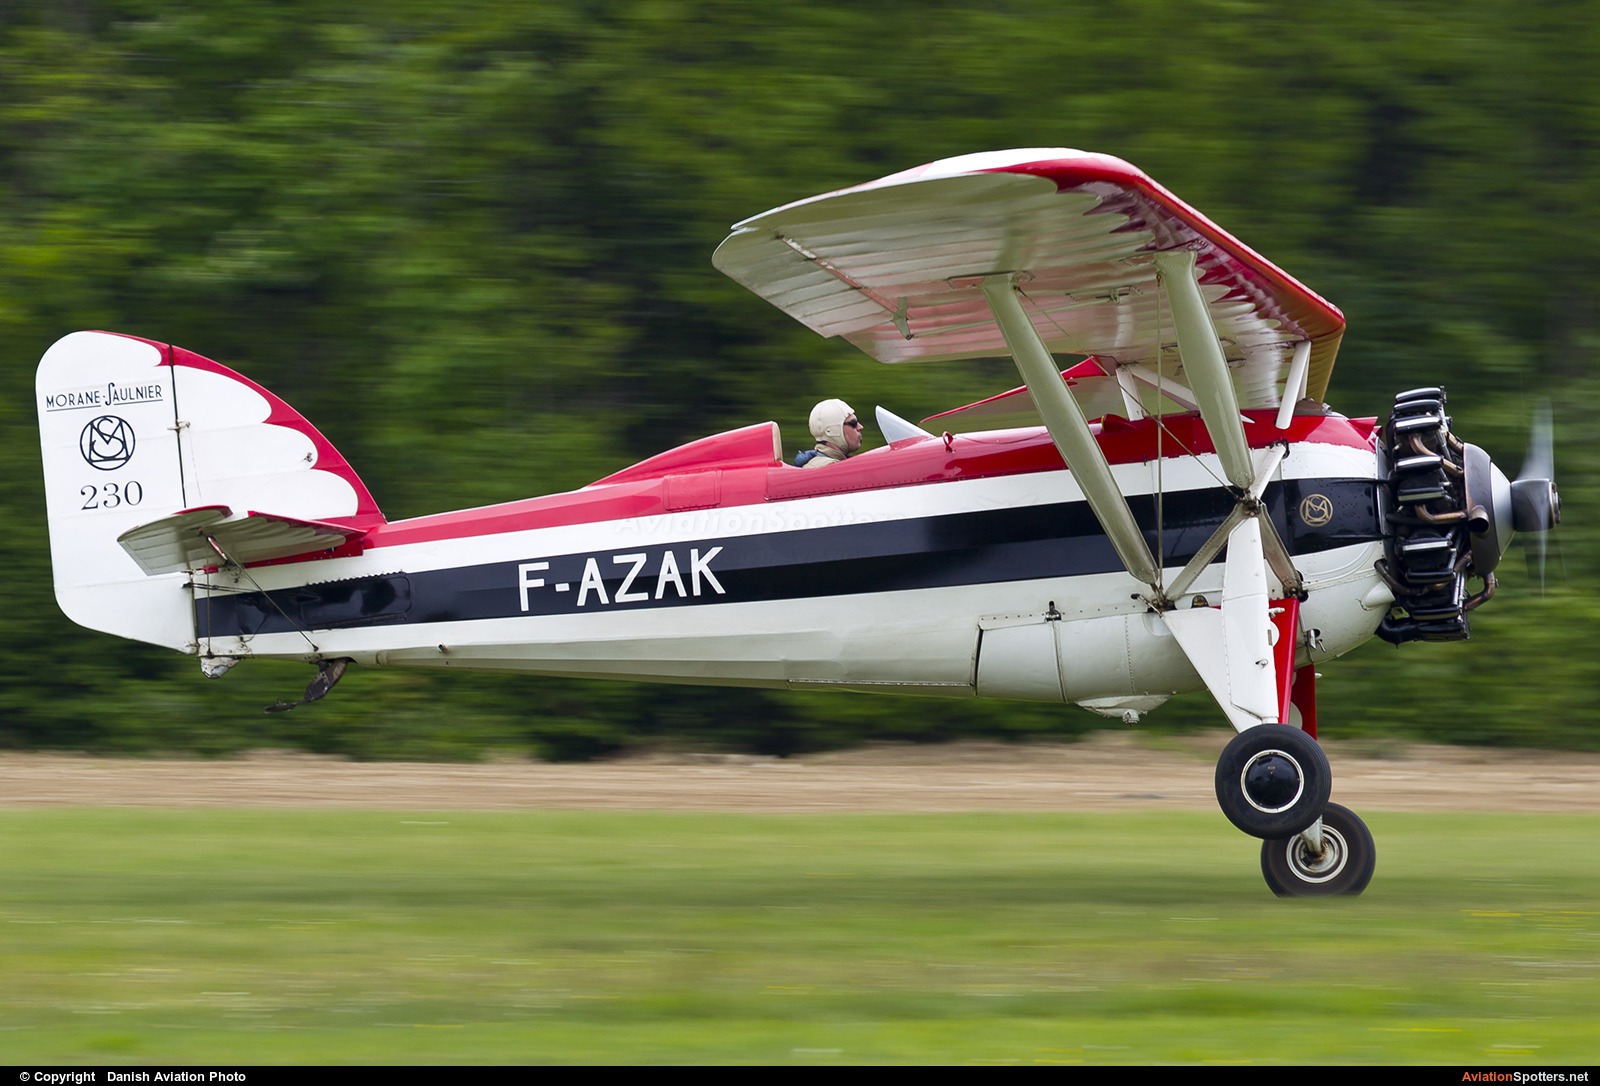   MS.230 Et2  (F-AZAK) By Danish Aviation Photo (Danish Aviation Photo)